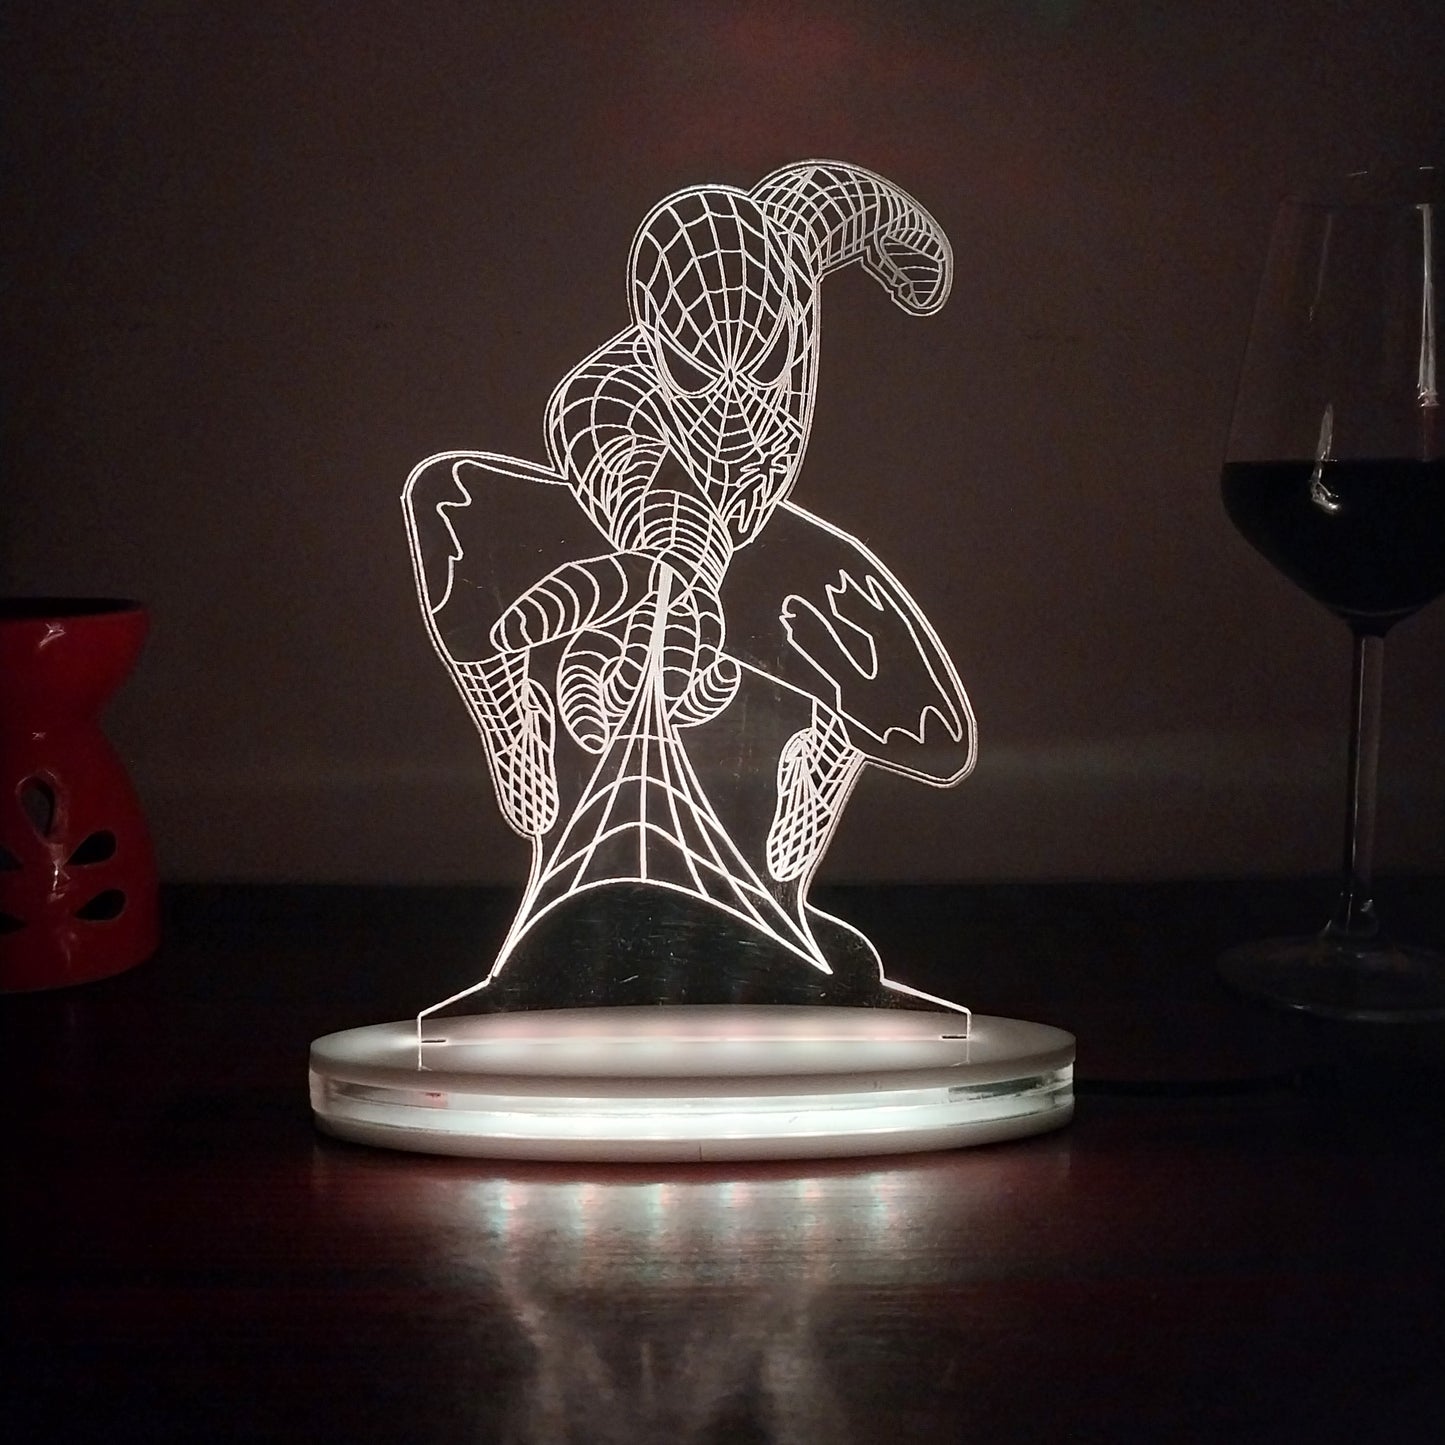 Spiderman Multicolor Acrylic 3D Illusion Lamp with Remote